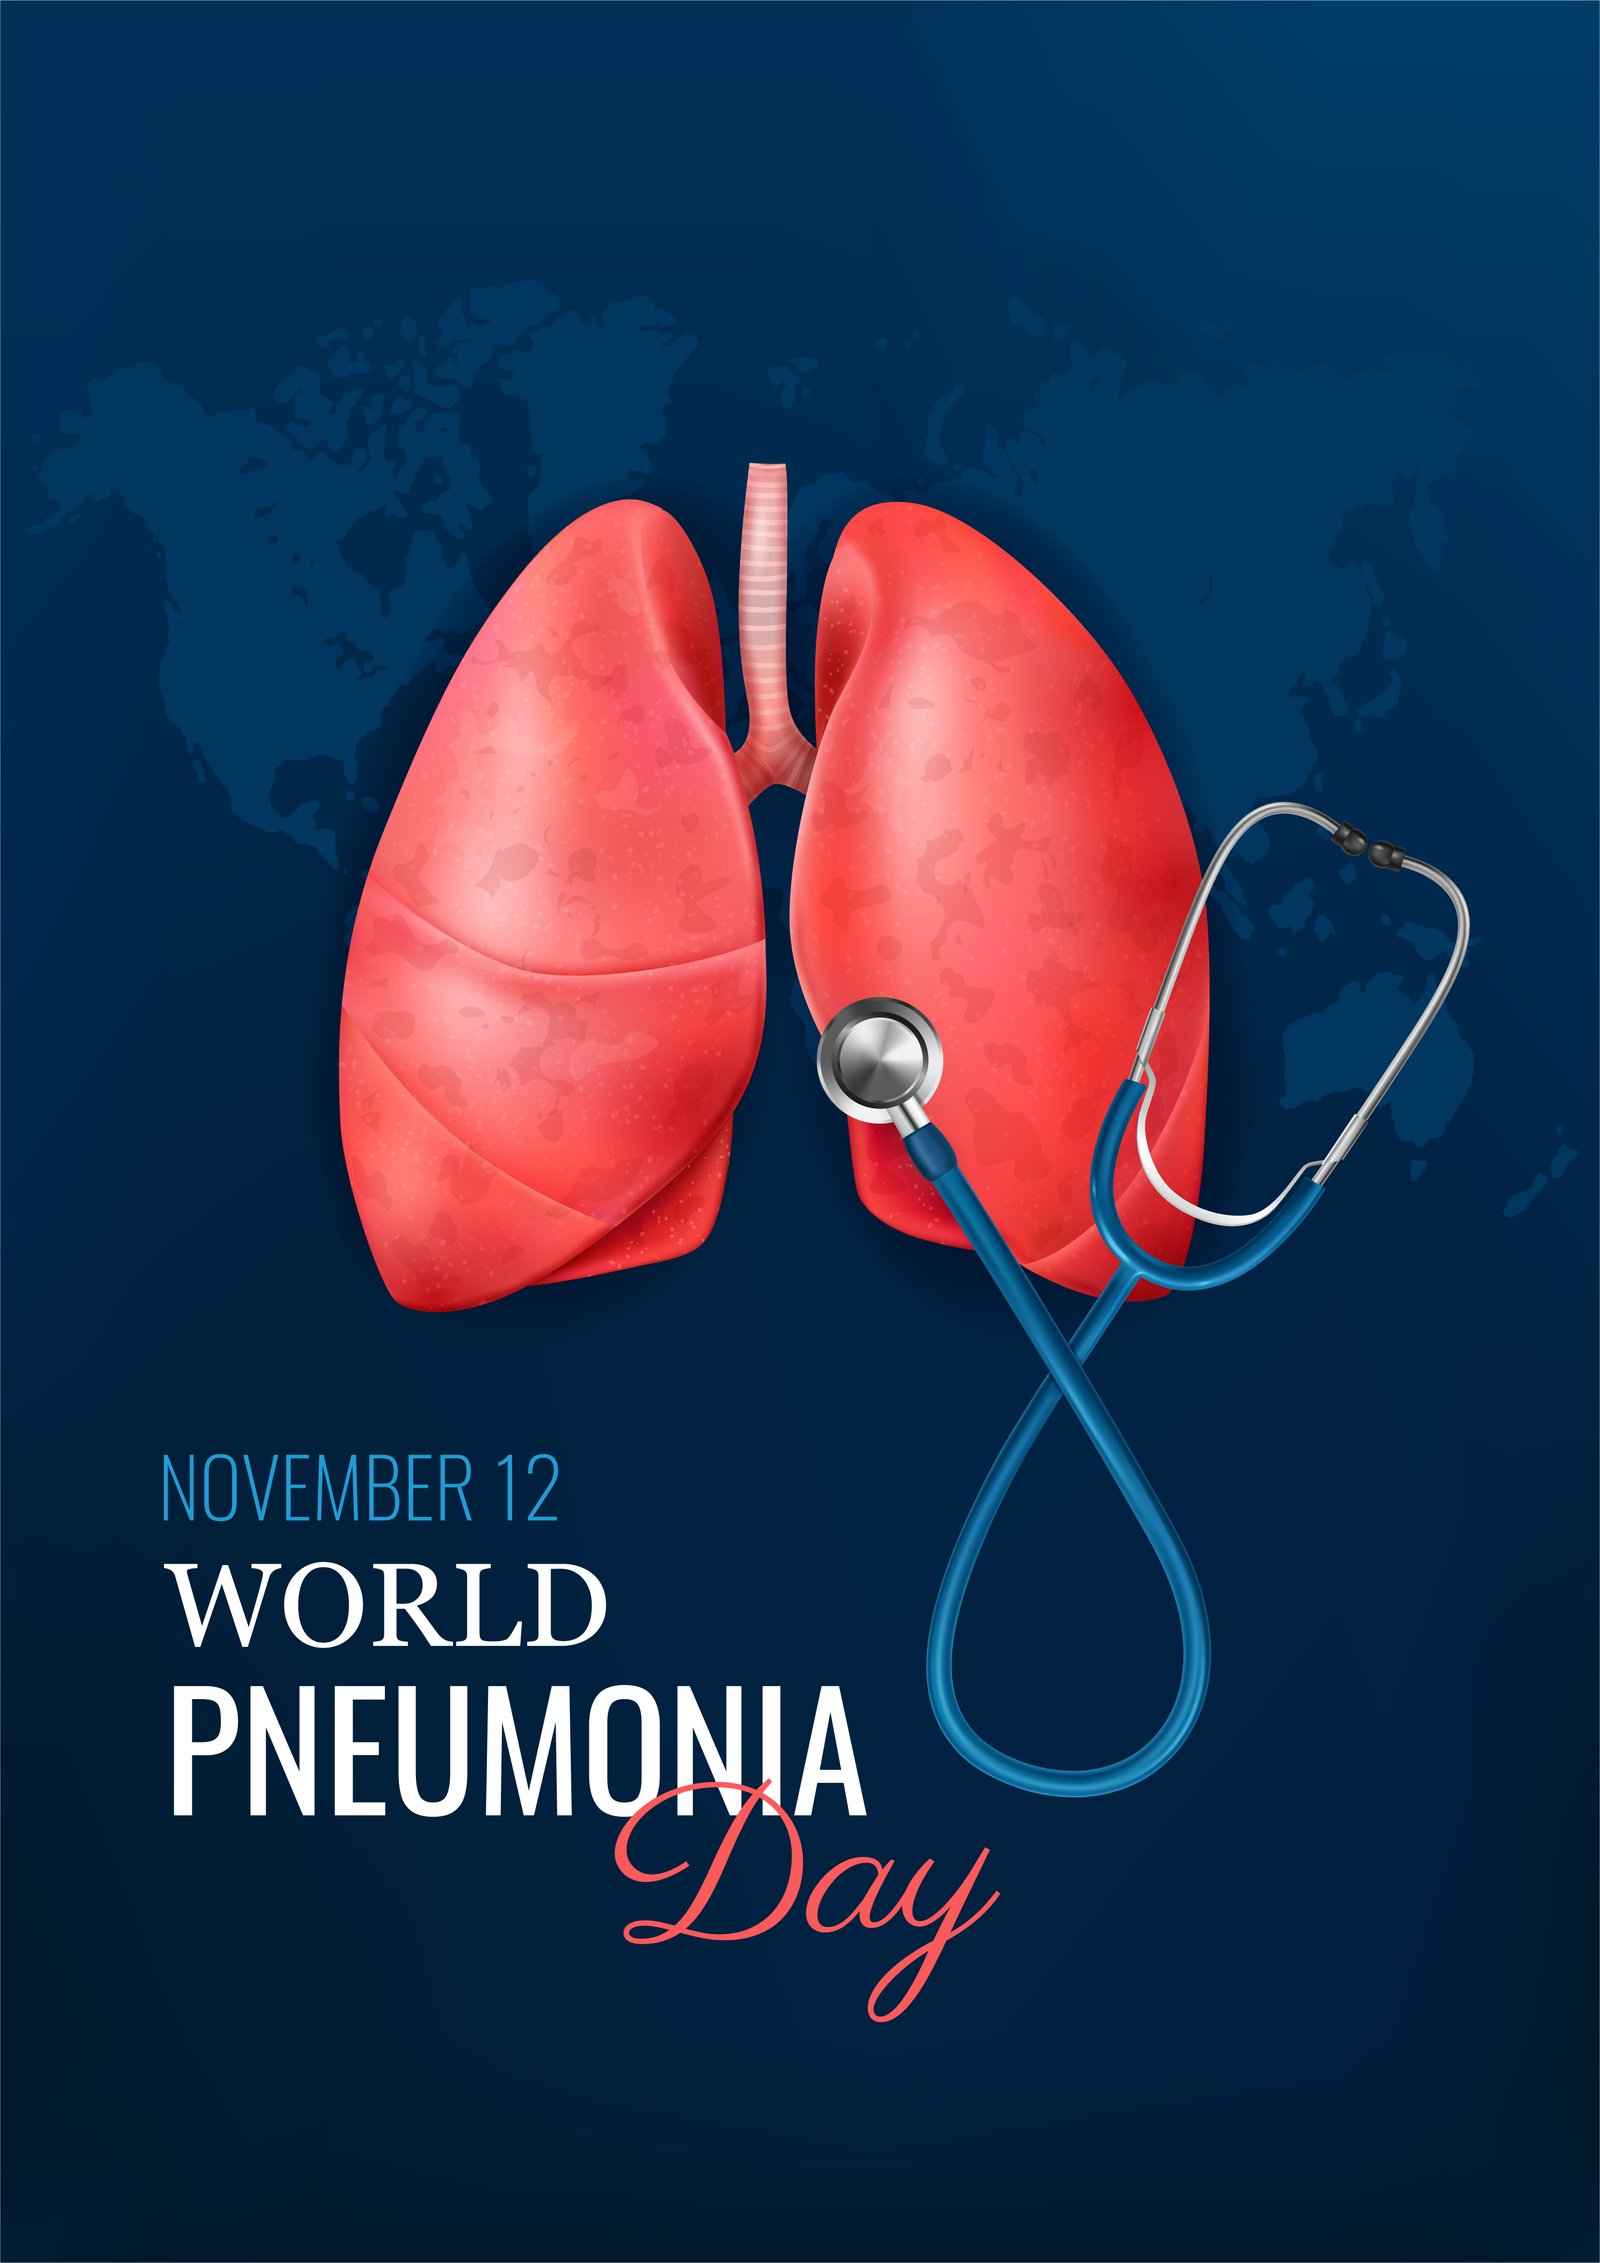 Pneumonia Disease Prevention: A Comprehensive Guide